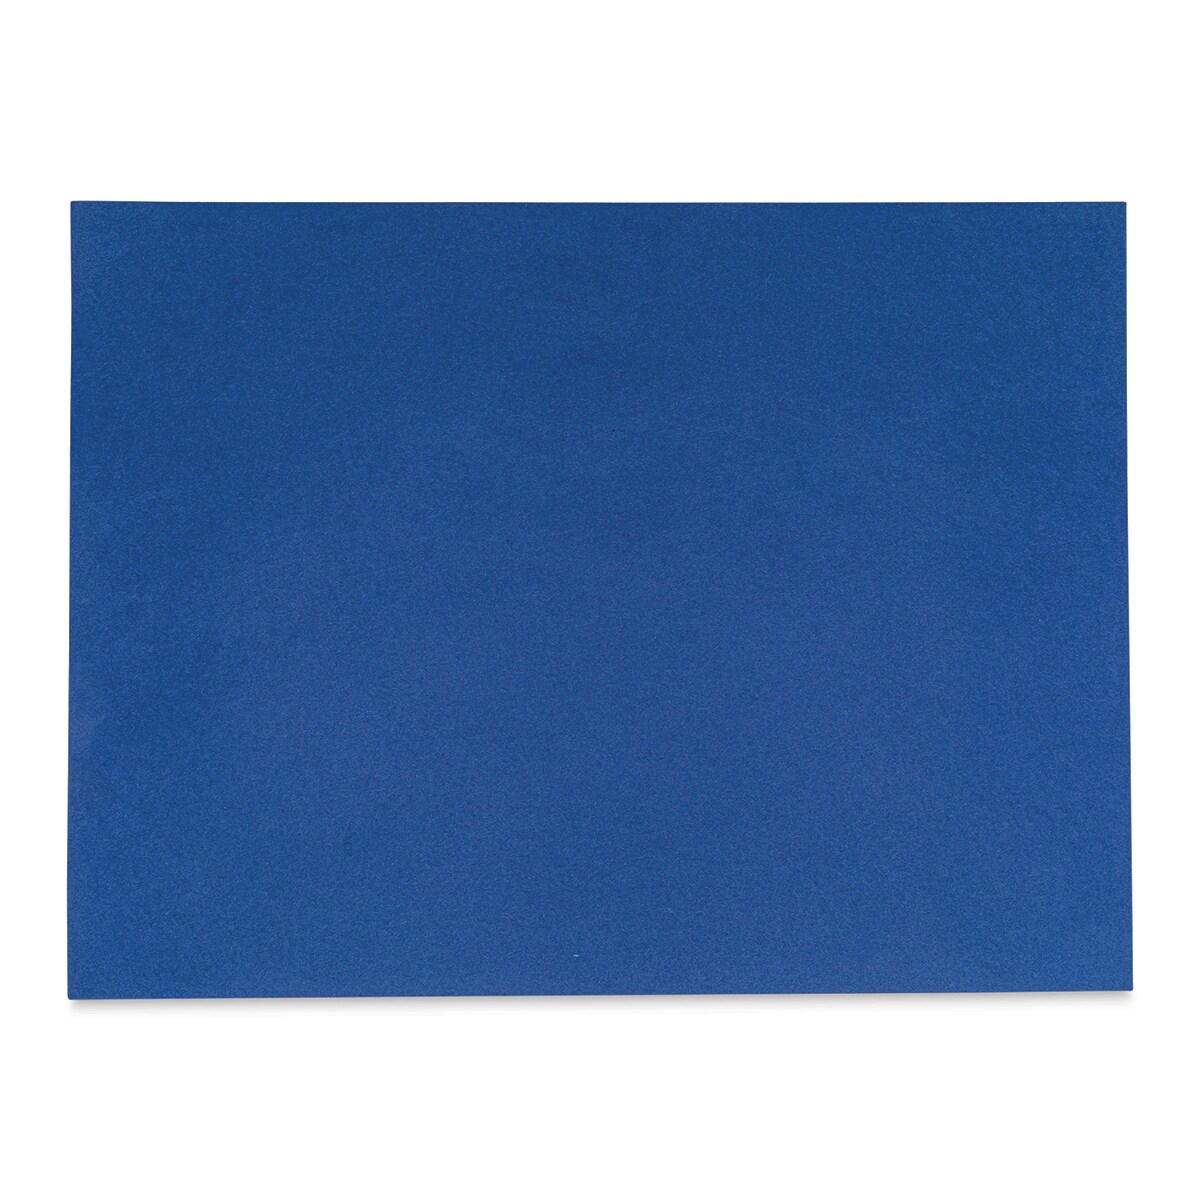 Construction Paper Blue - Tru-Ray